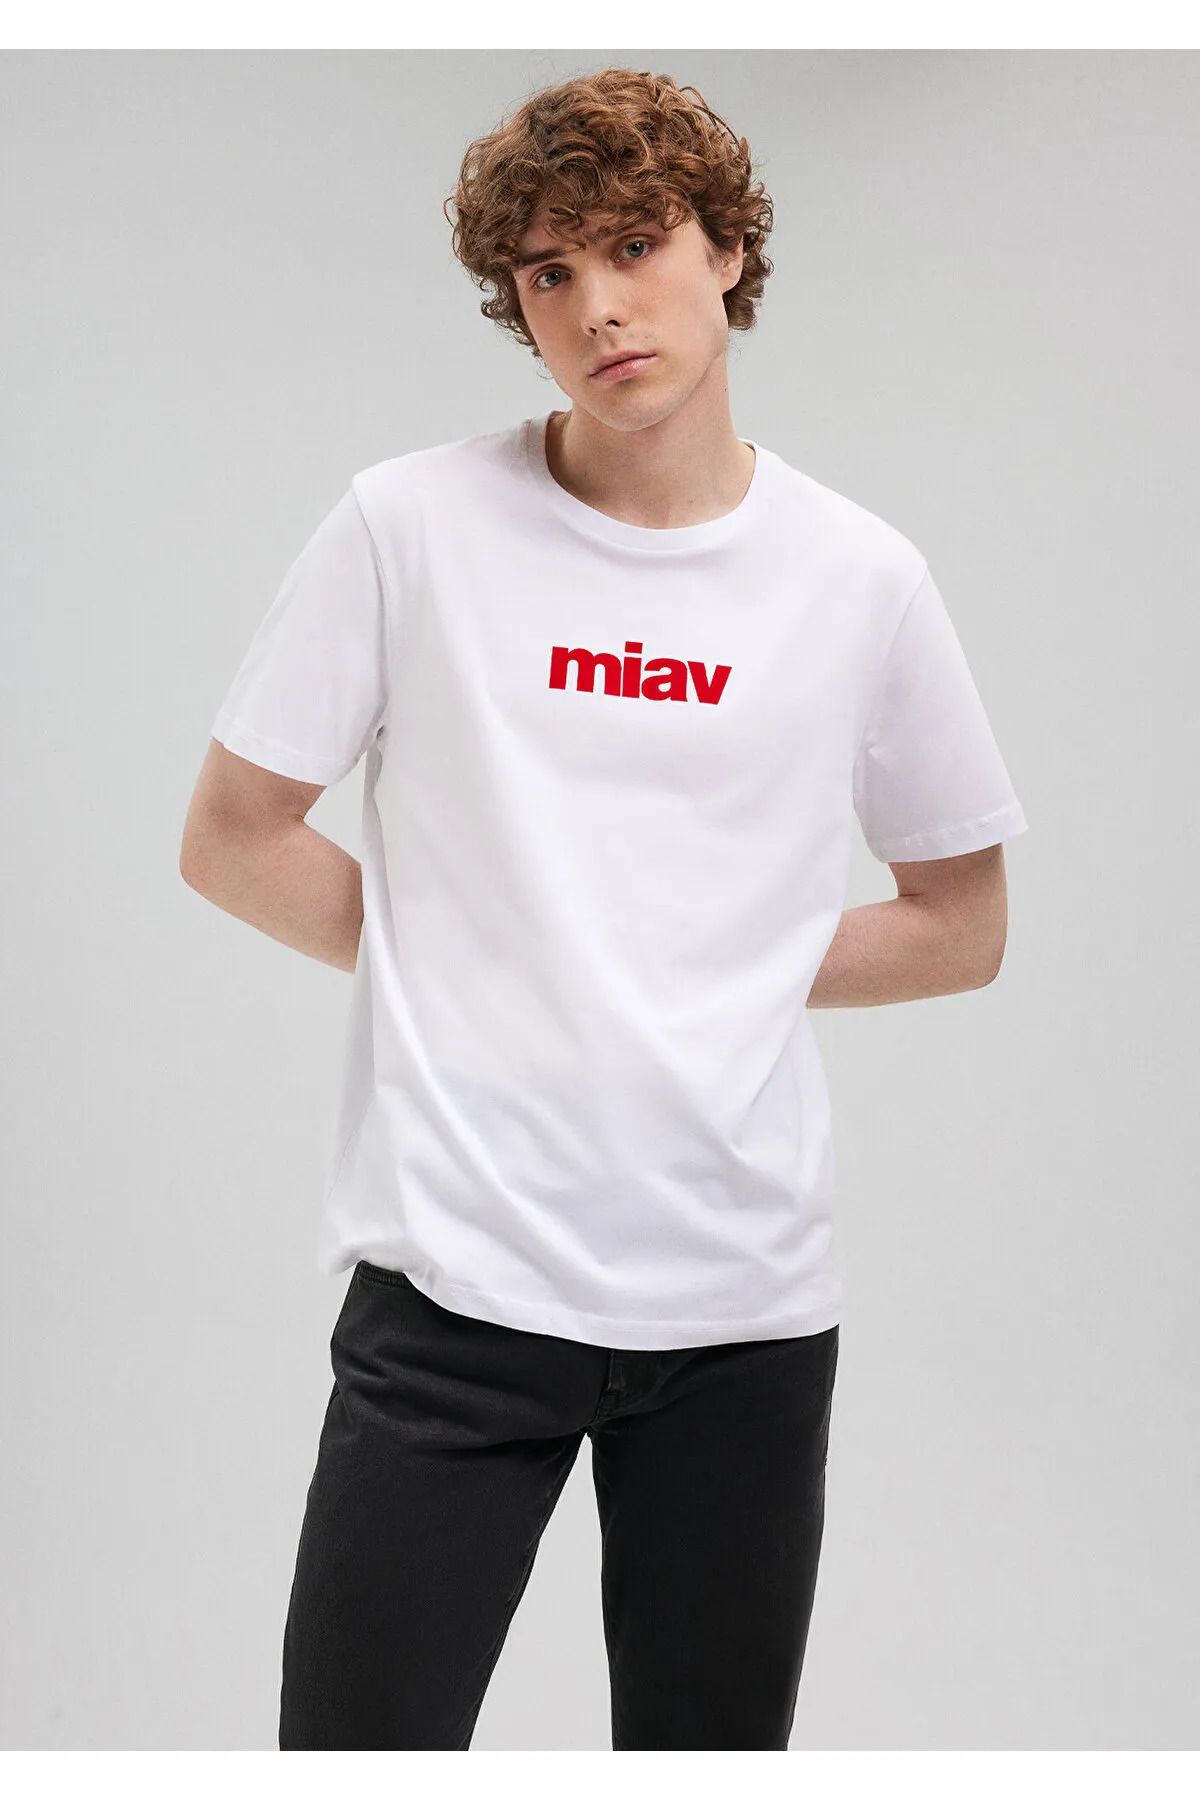 Mavi تی شرت سفید چاپ شده Red MIAV به طور منظم / برش معمولی 067153-602-455